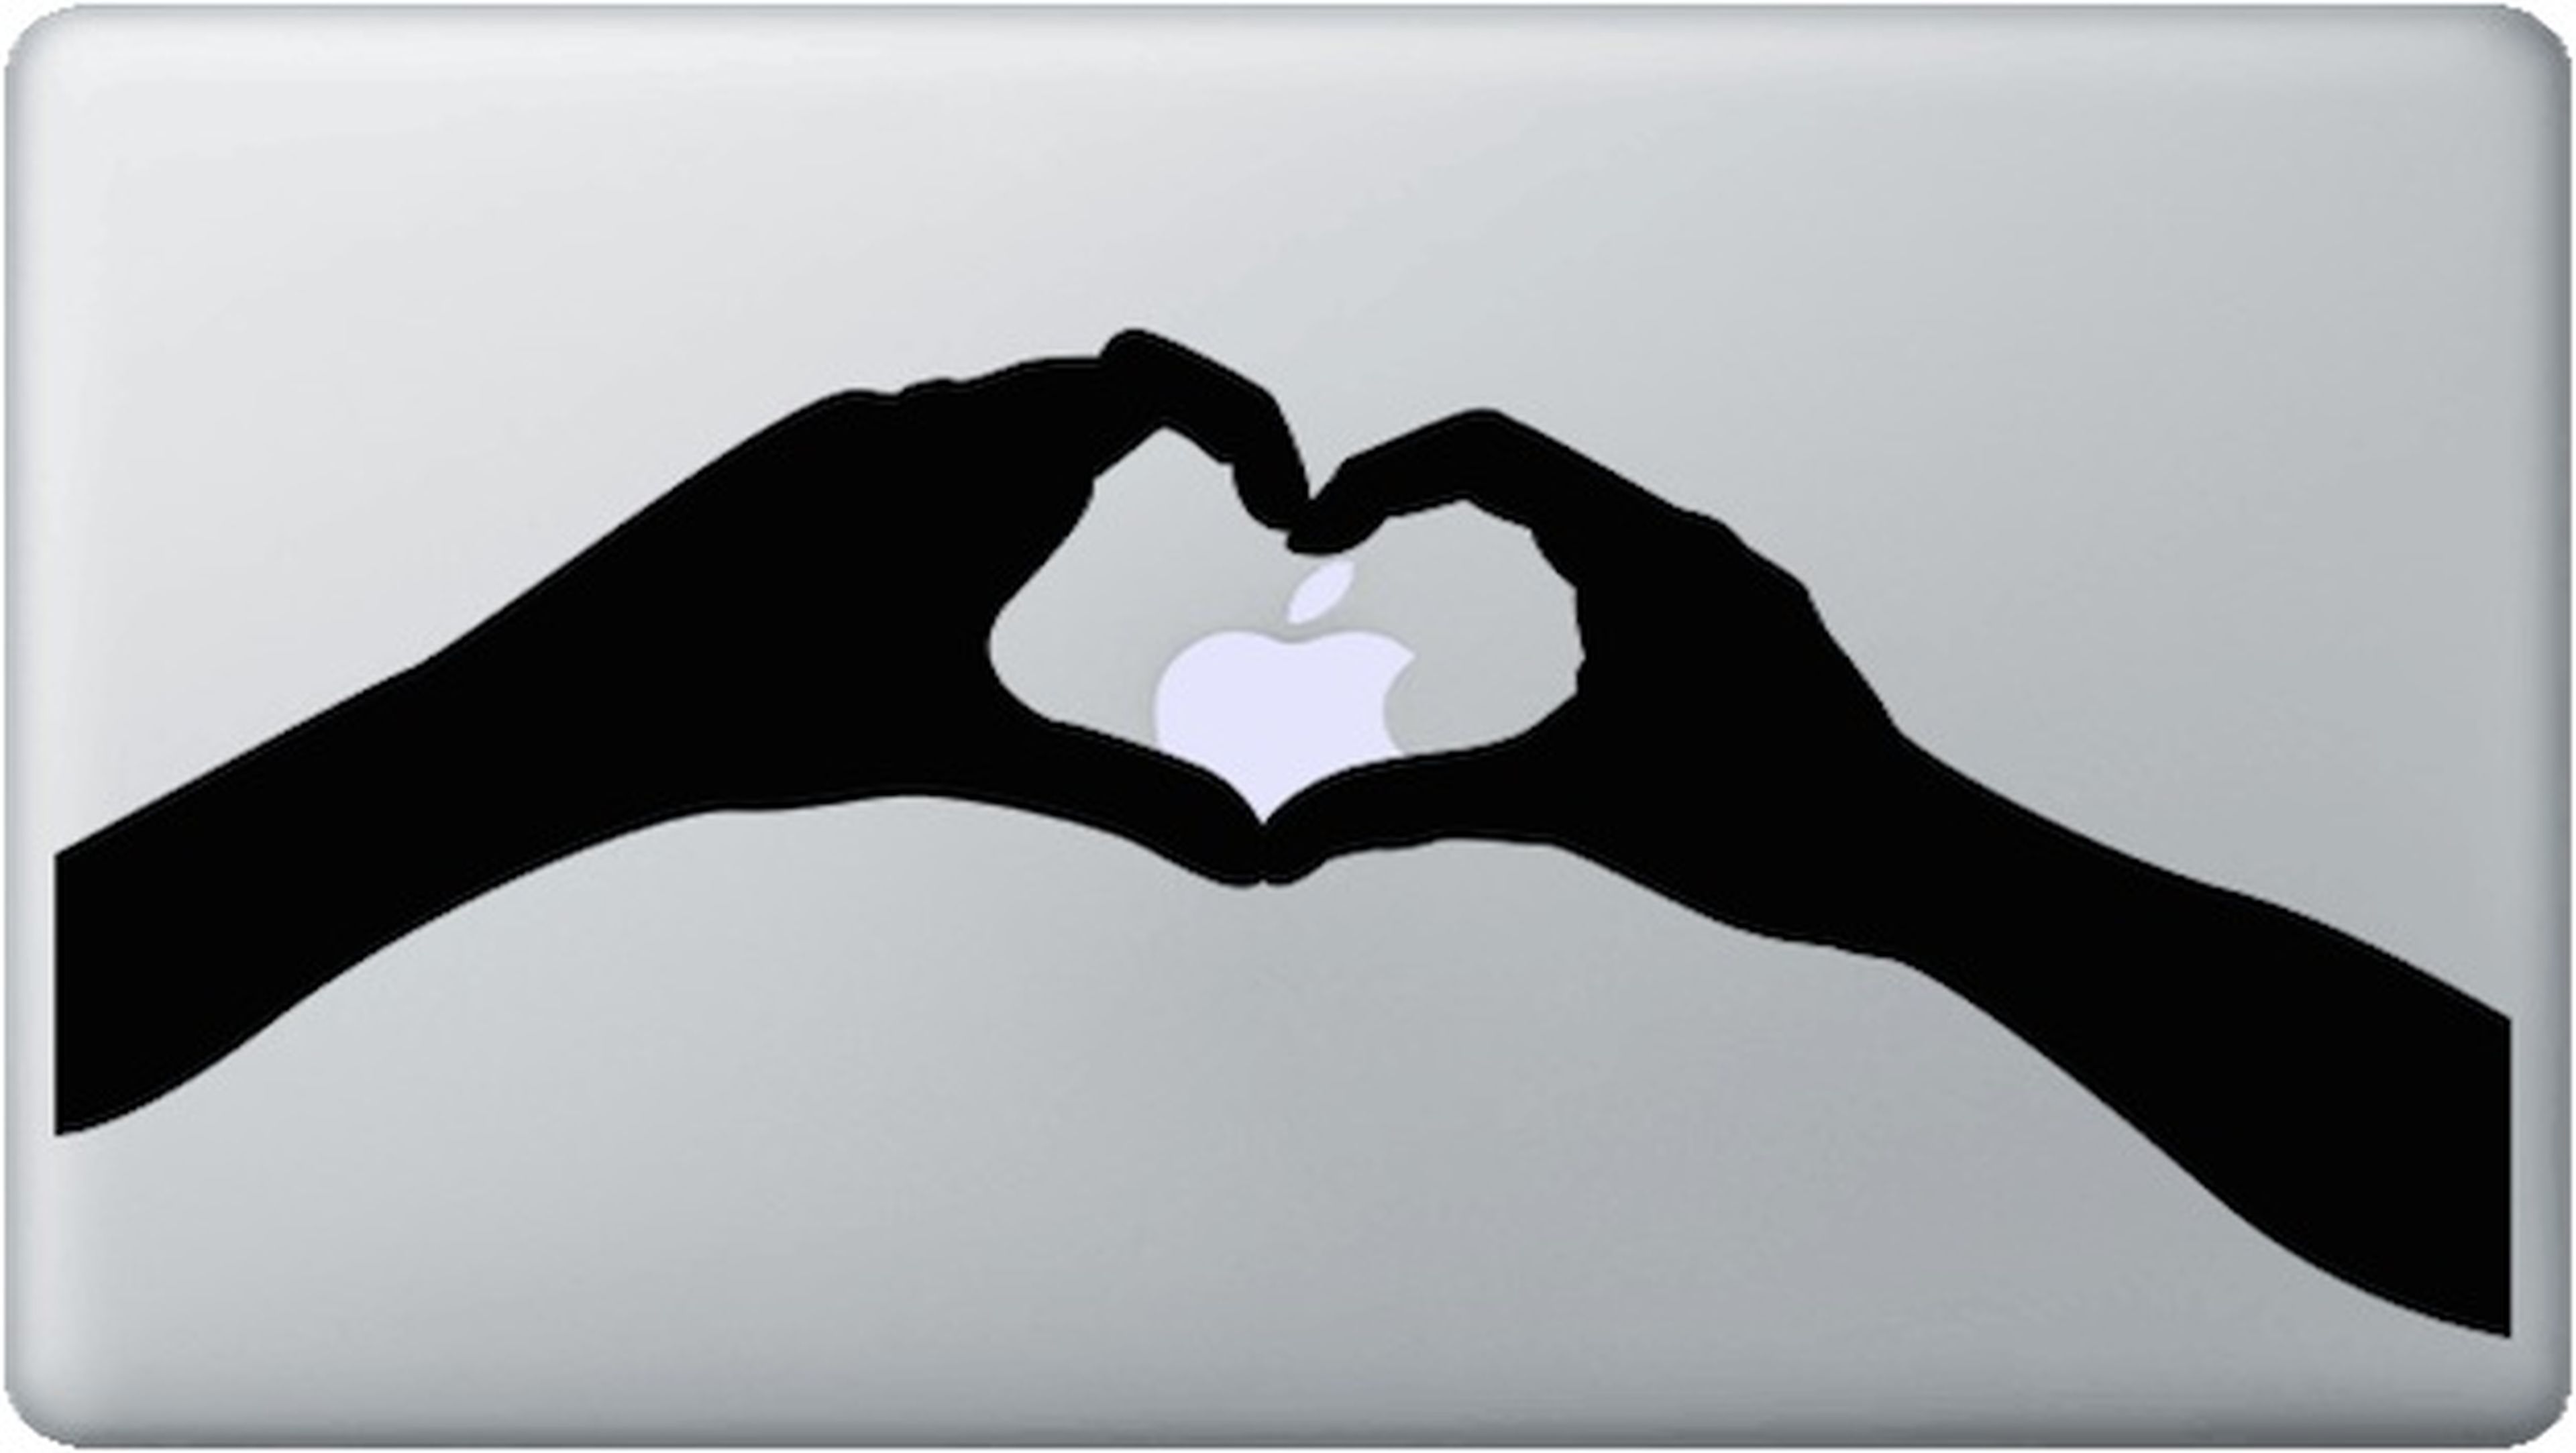 Love your Mac